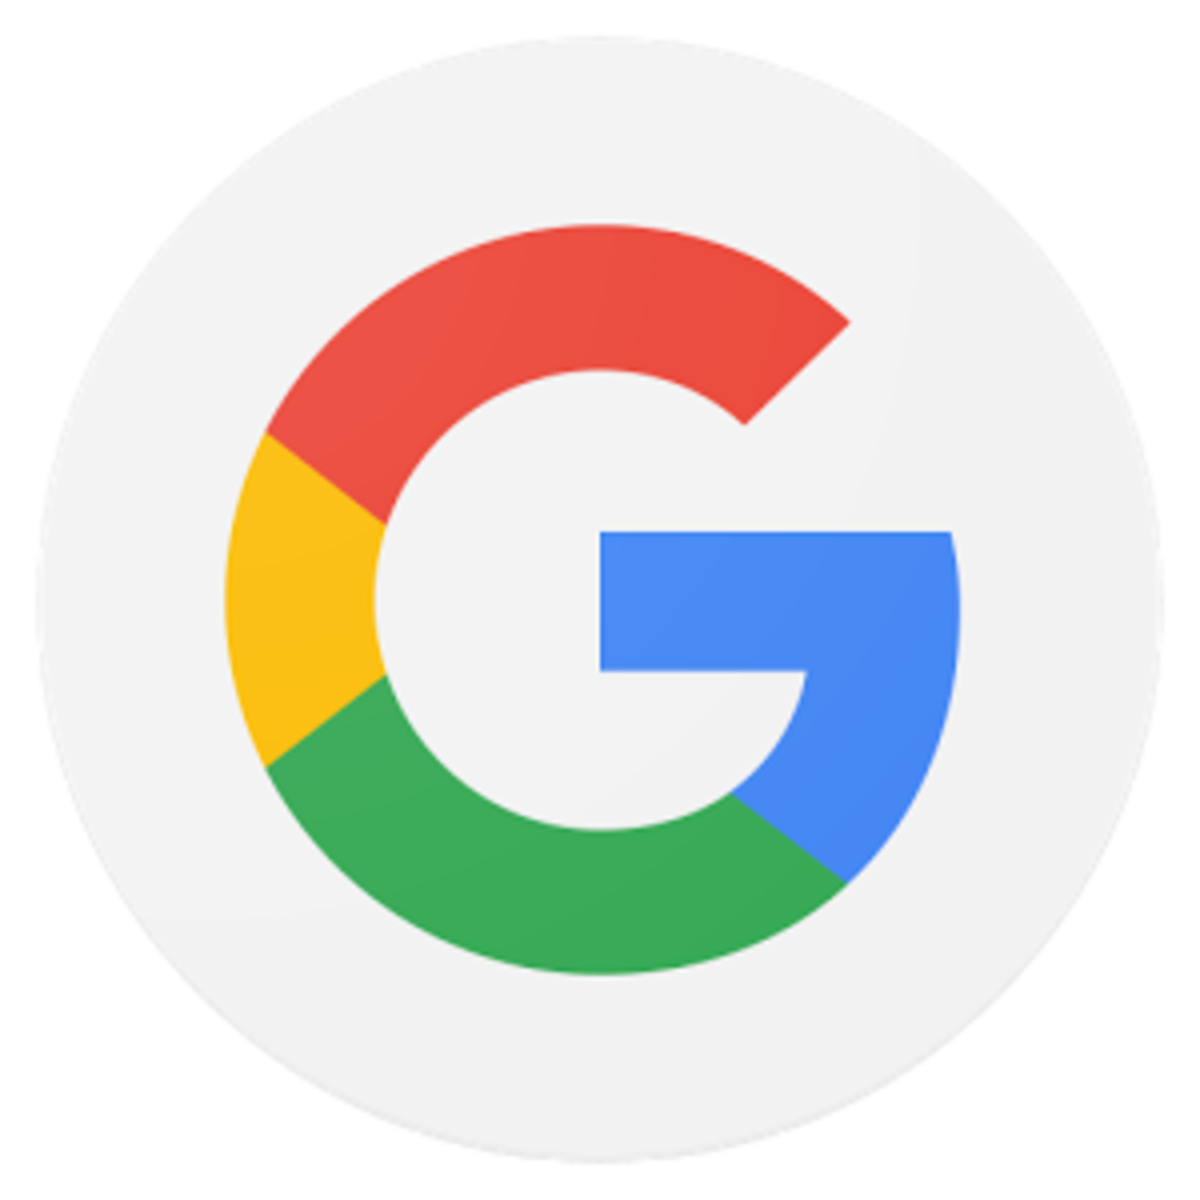 Logo Now Google Plus Search Free Transparent Image HD PNG Image